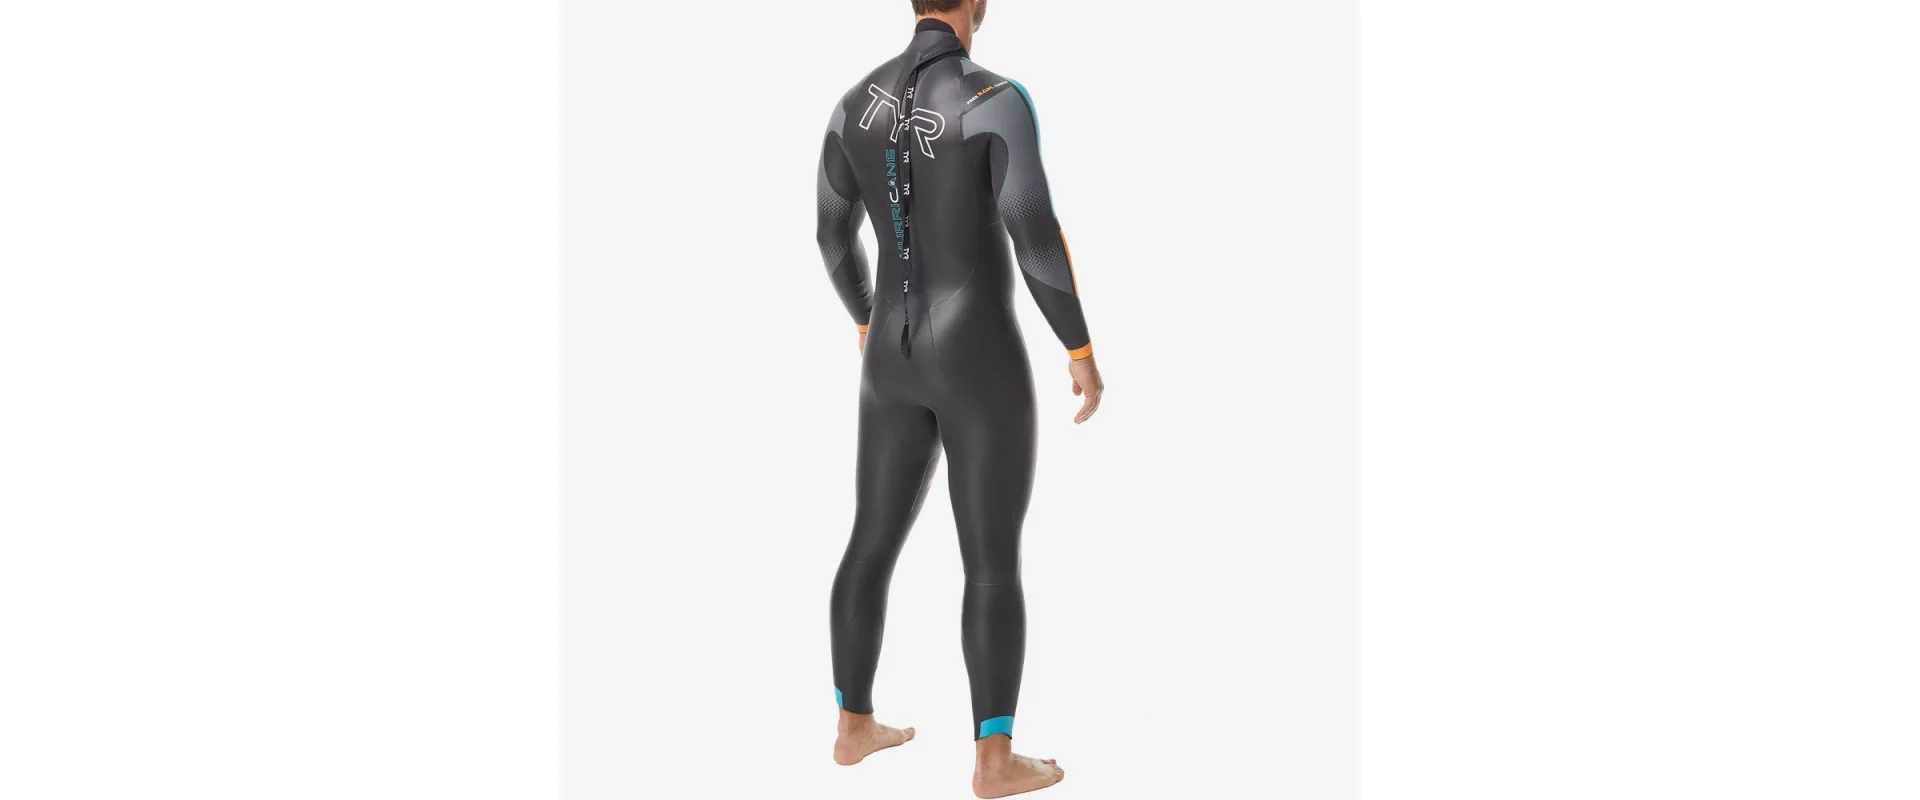 Latex wetsuit